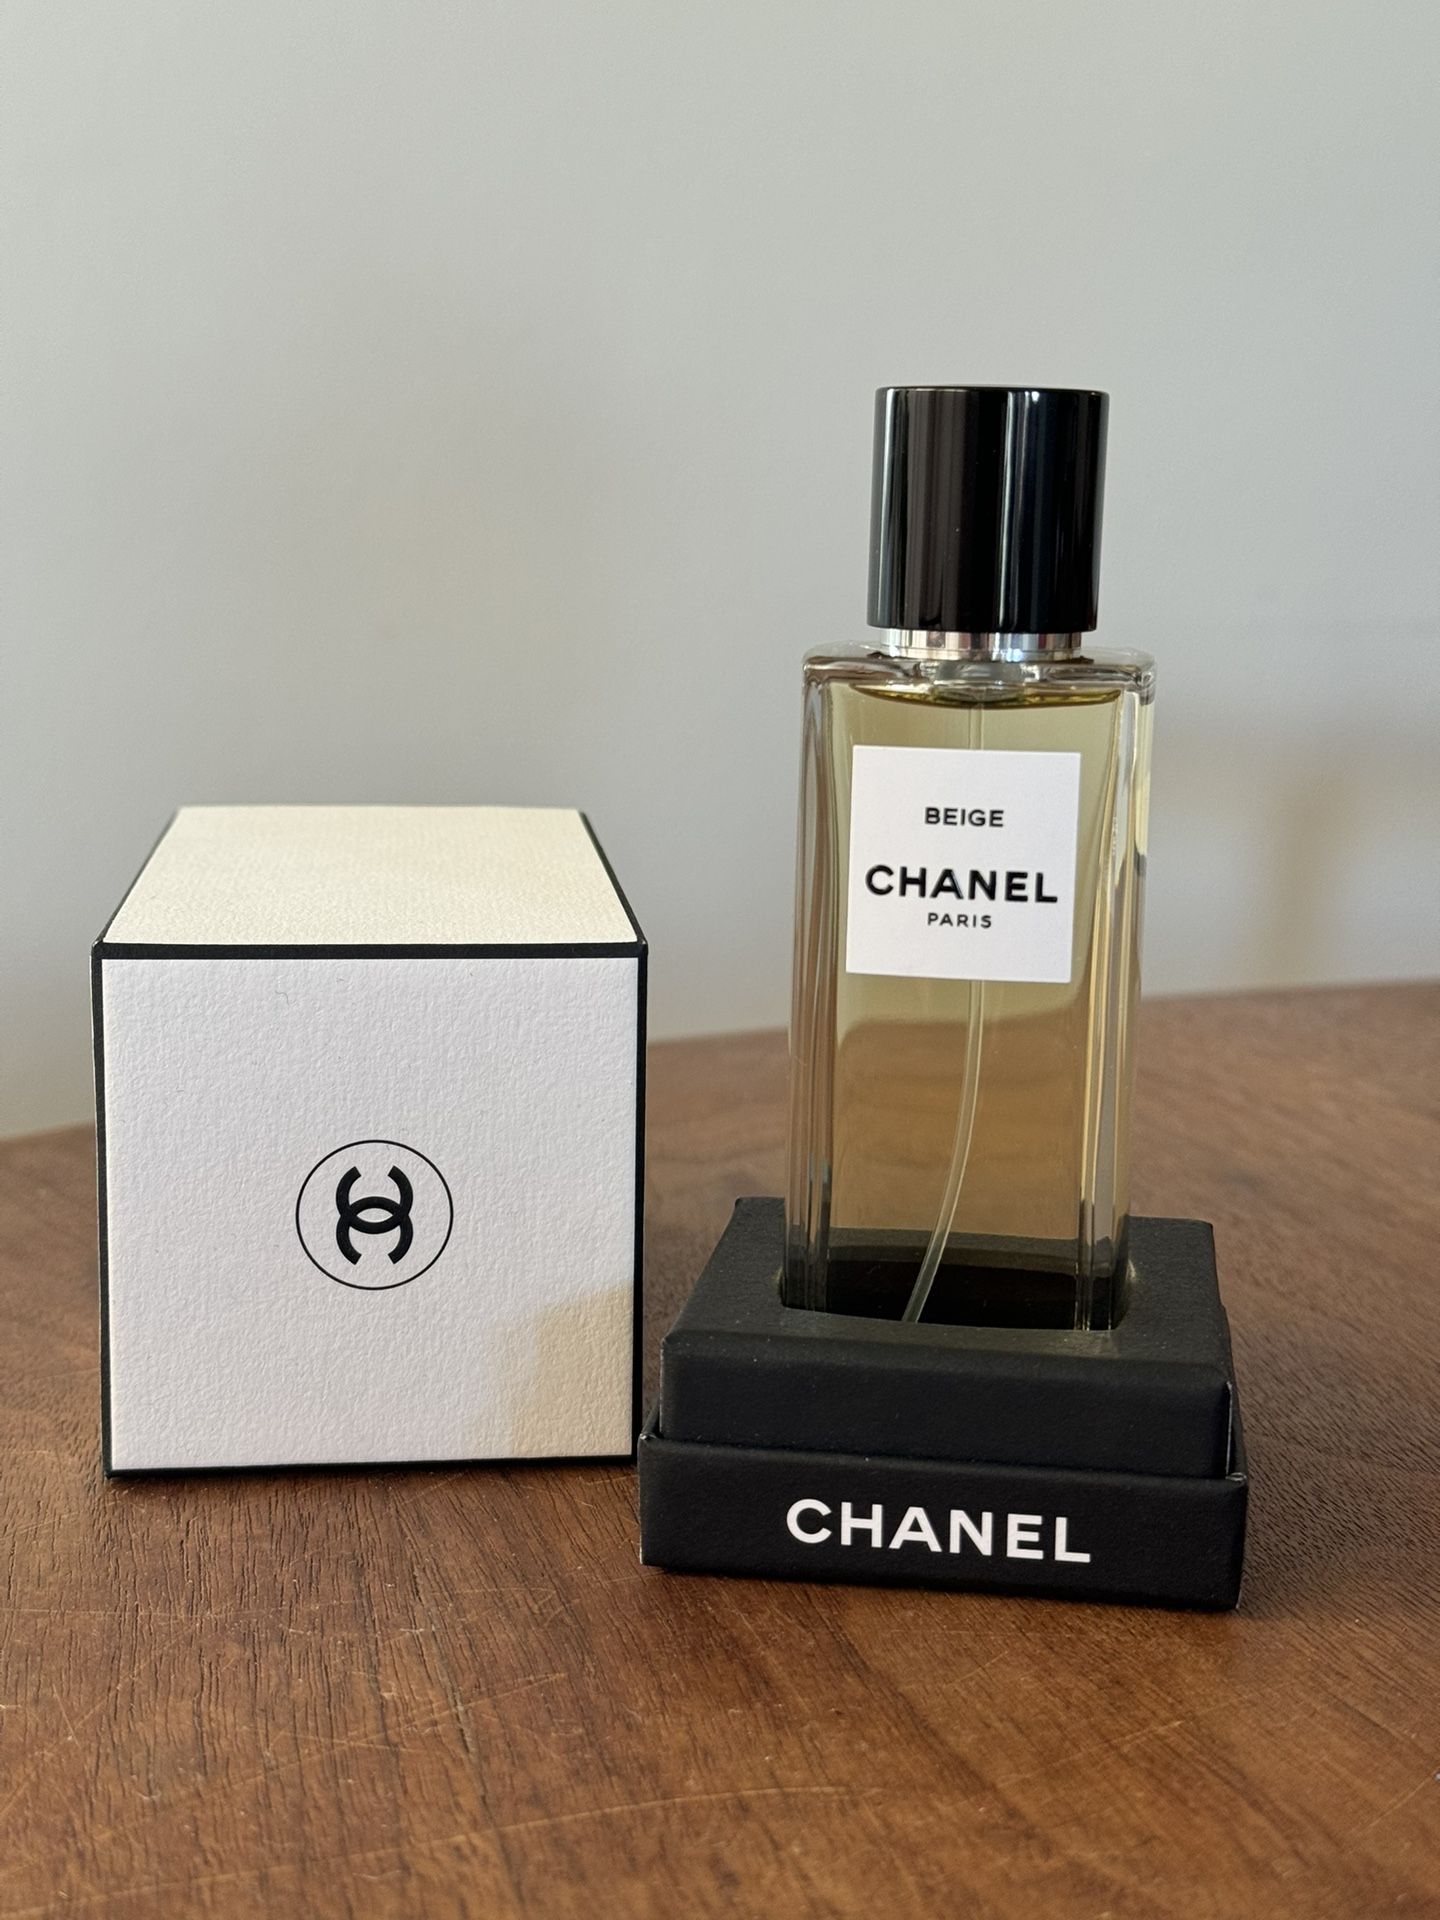 Chanel Beige Perfume (New With Box) - 6.8 Fl Oz